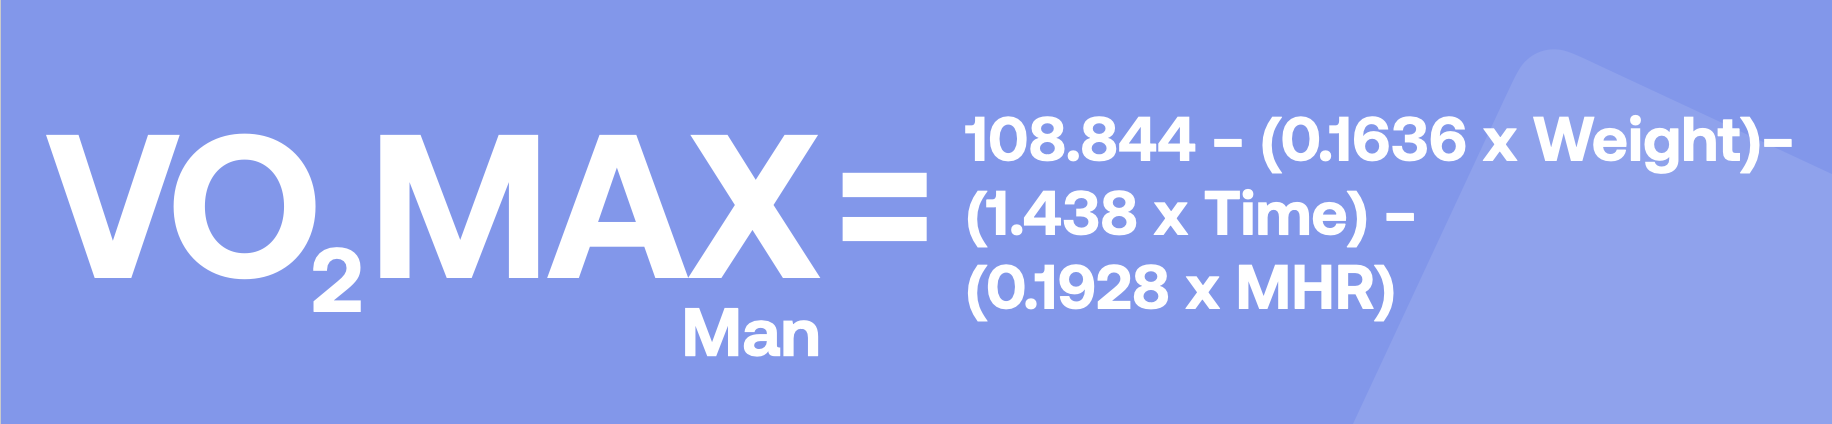 VO₂ MAXman = 108.844 - (0.1636 x Weight) - (1.438 x Time) - (0.1928 x MHR)